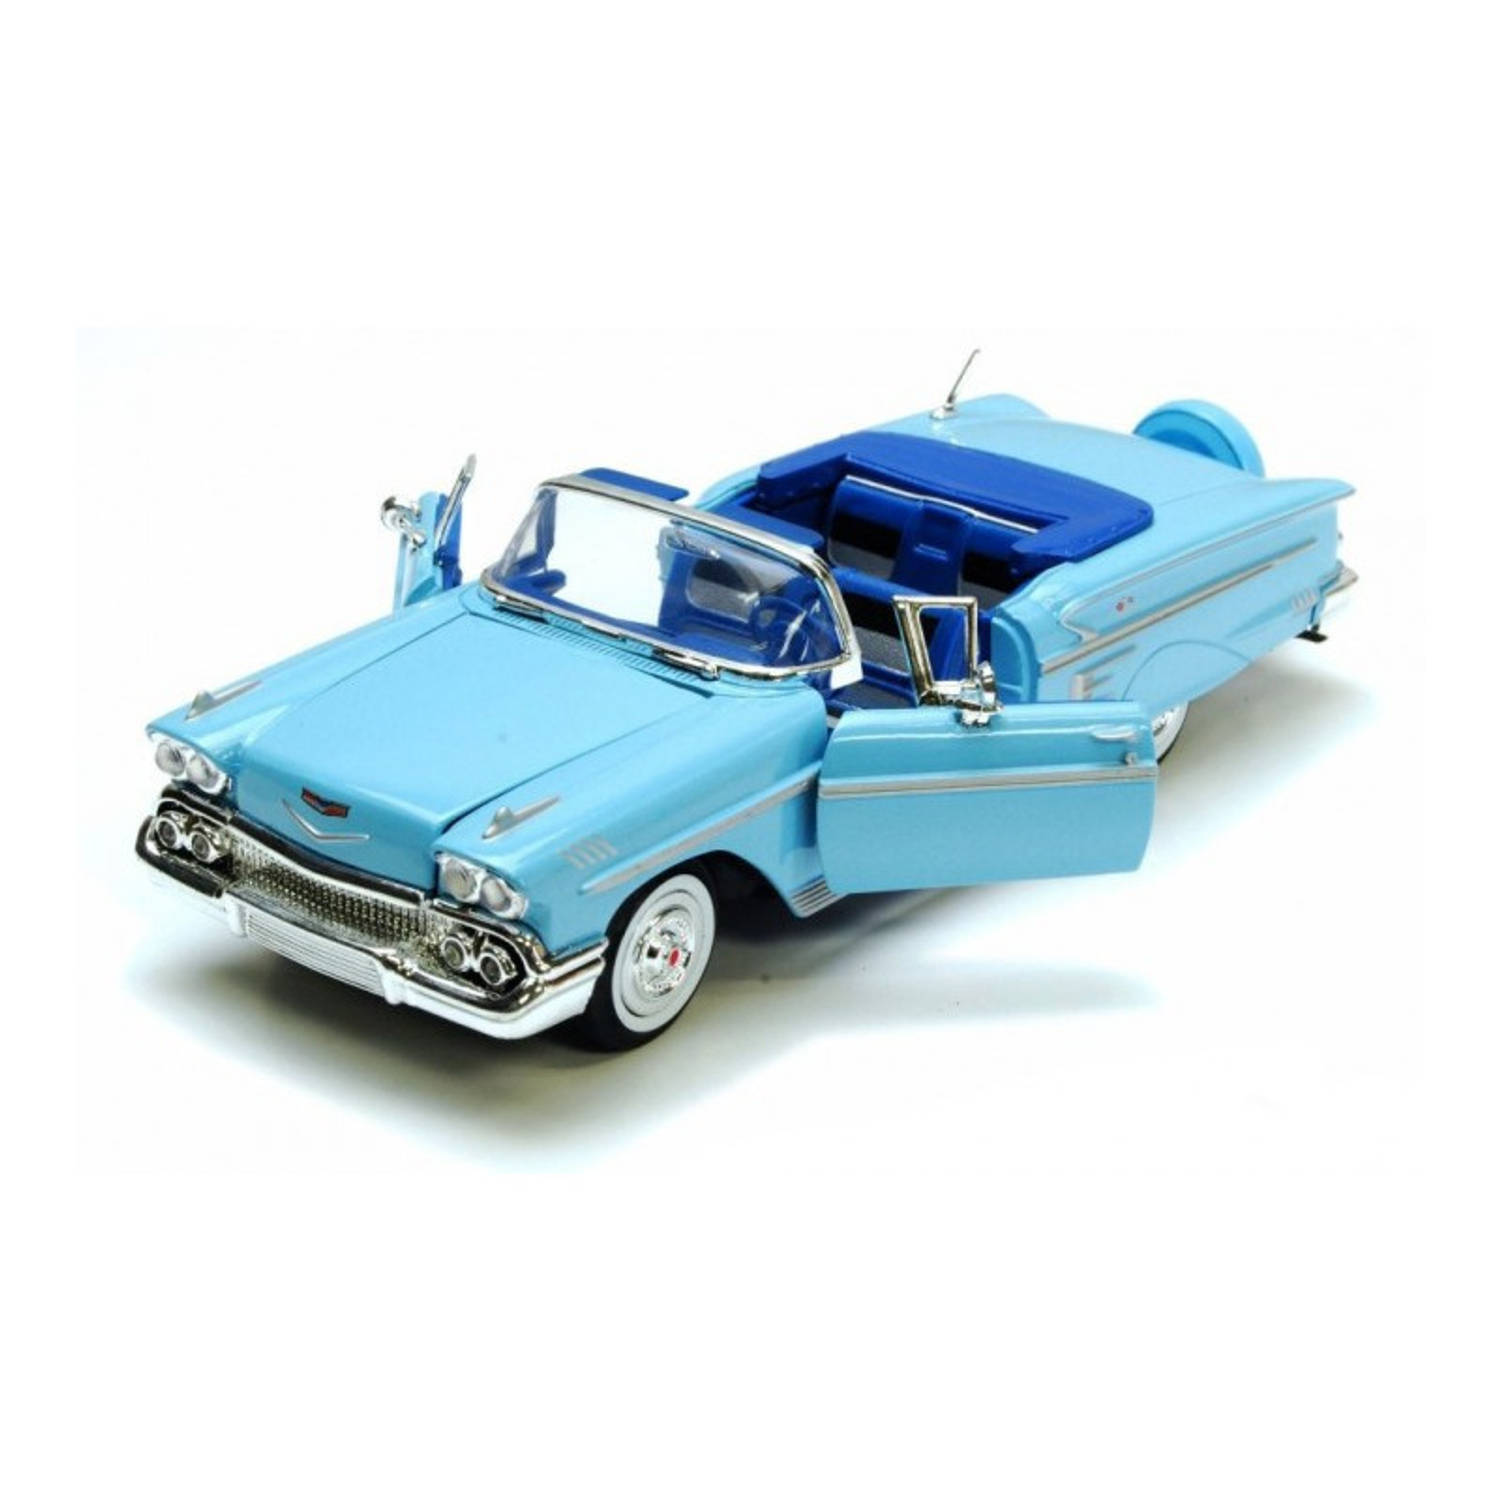 Modelauto Chevrolet Impala 1958 blauw 22 x 8 x 6 cm - Schaal 1:24 - Speelgoedauto - Miniatuurauto